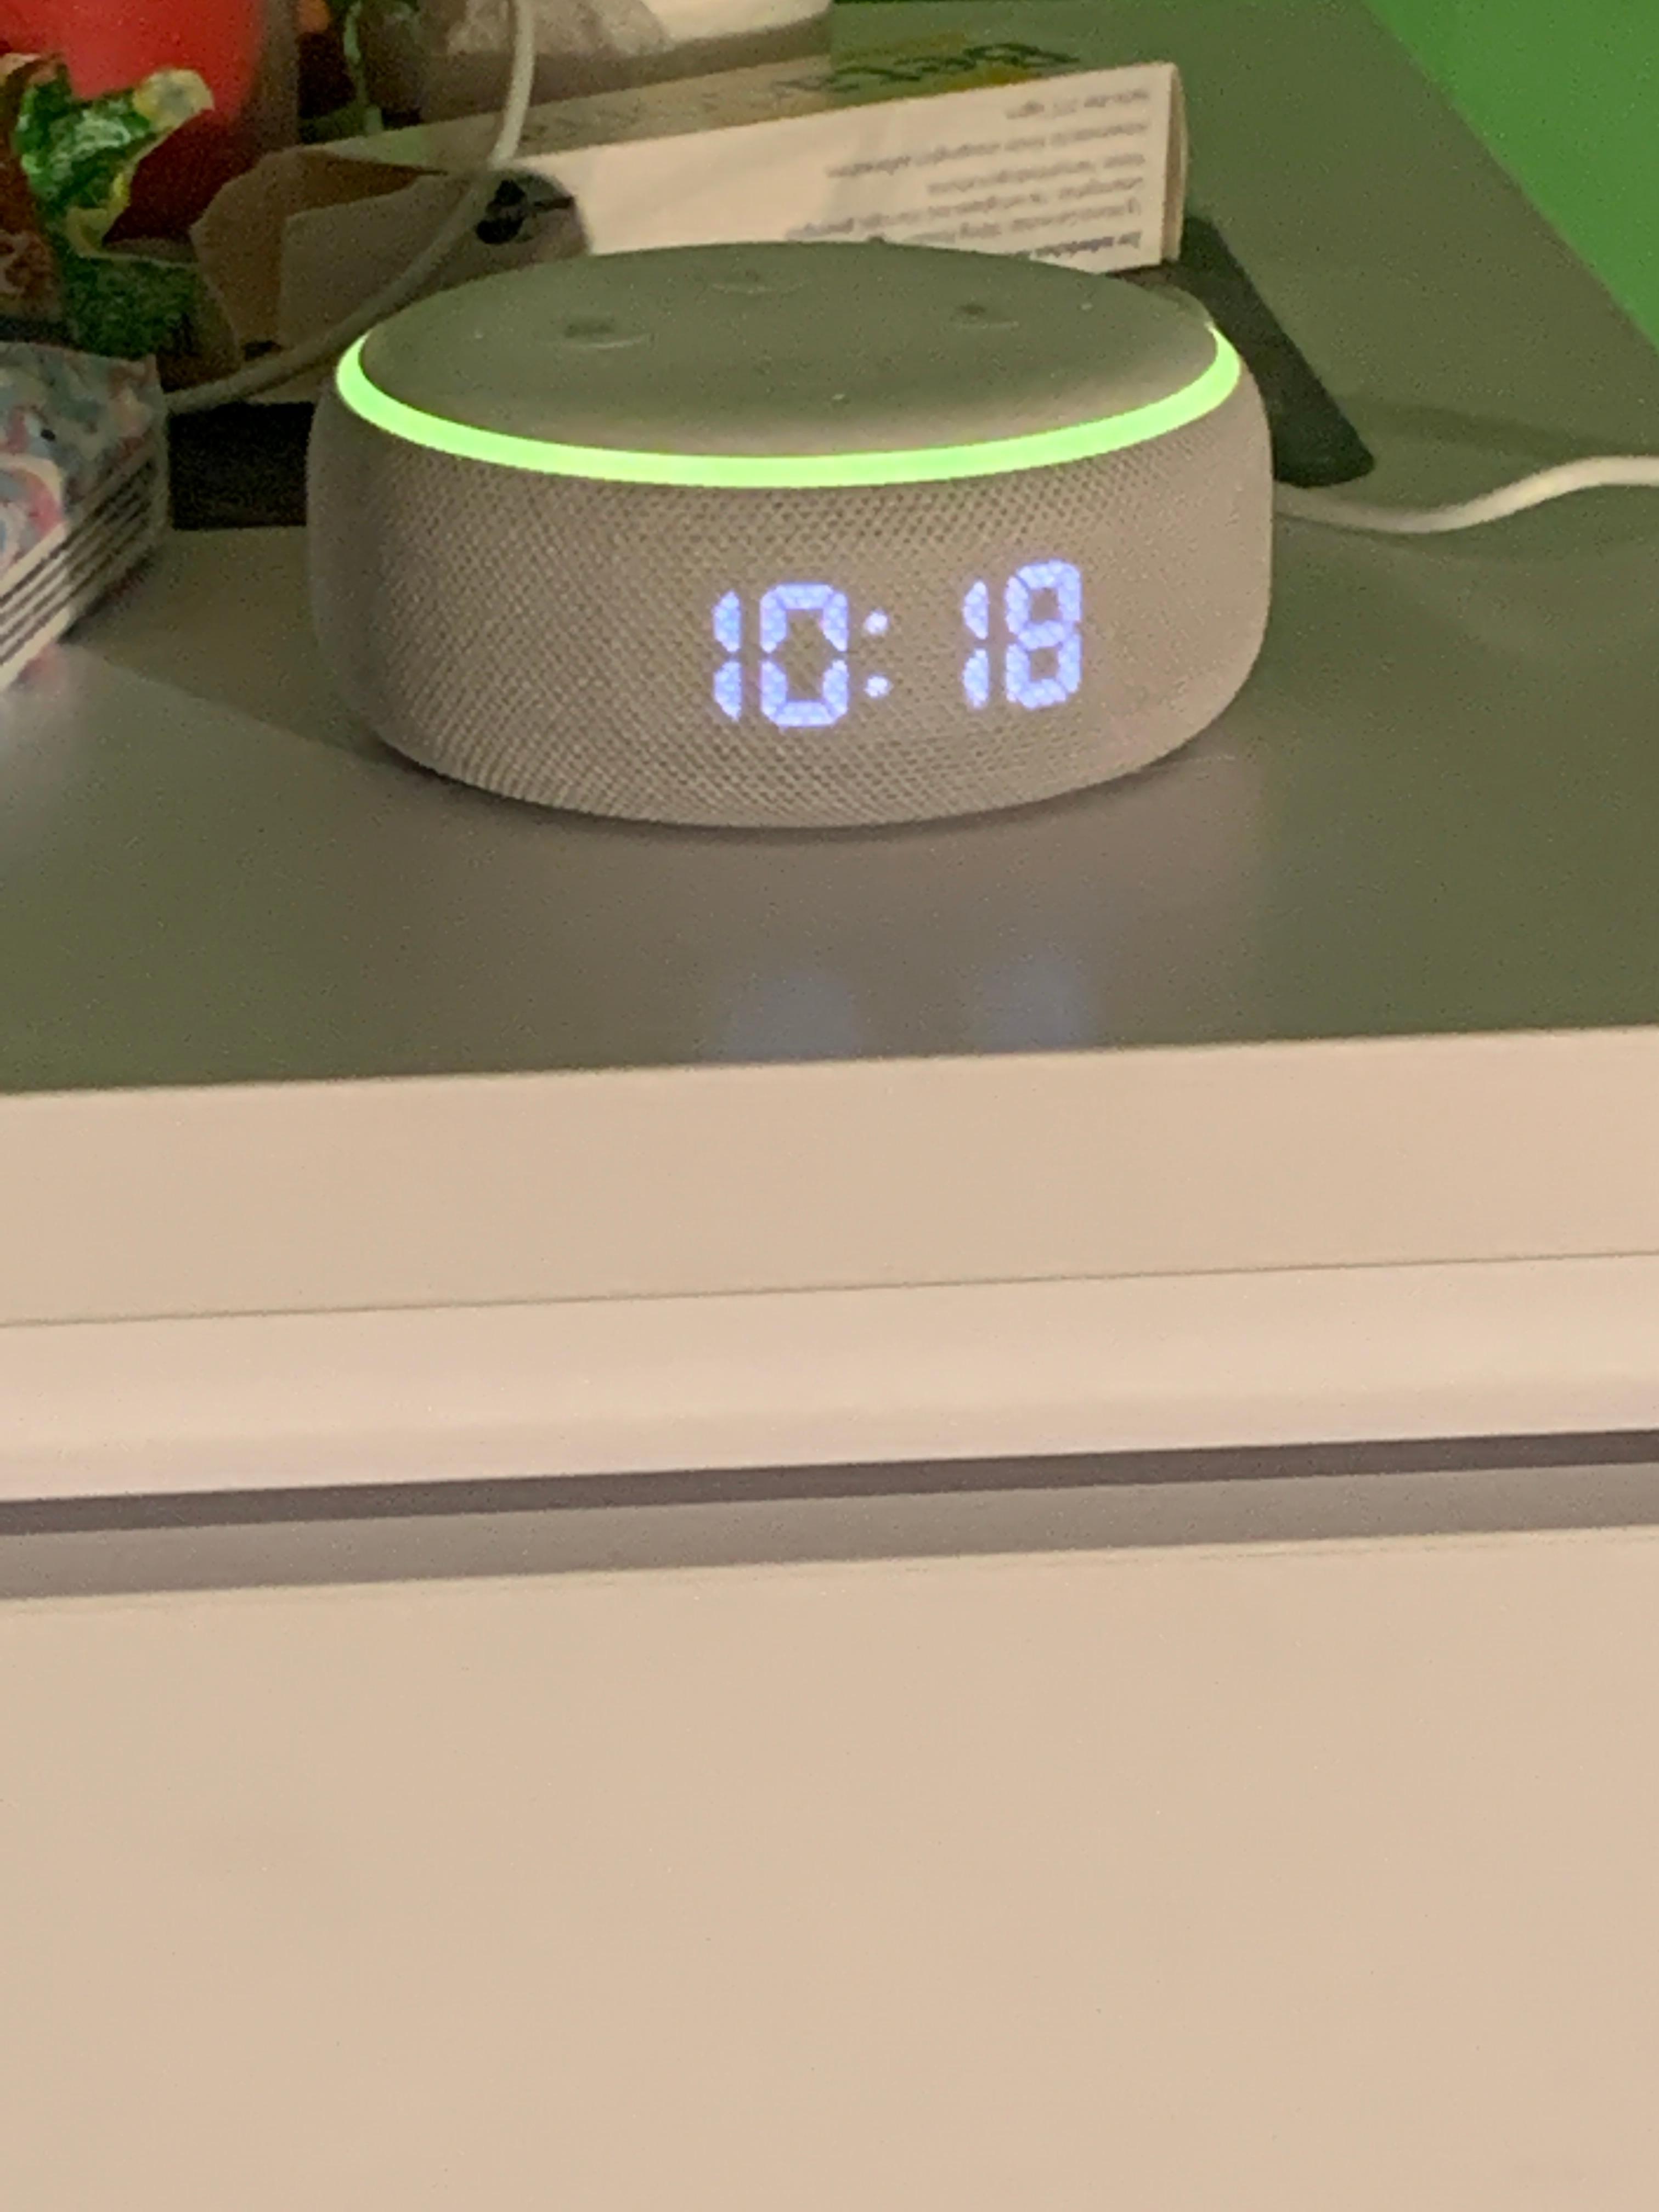 Meine Alexa blinkt Grün? (Computer, Technik, Technologie)